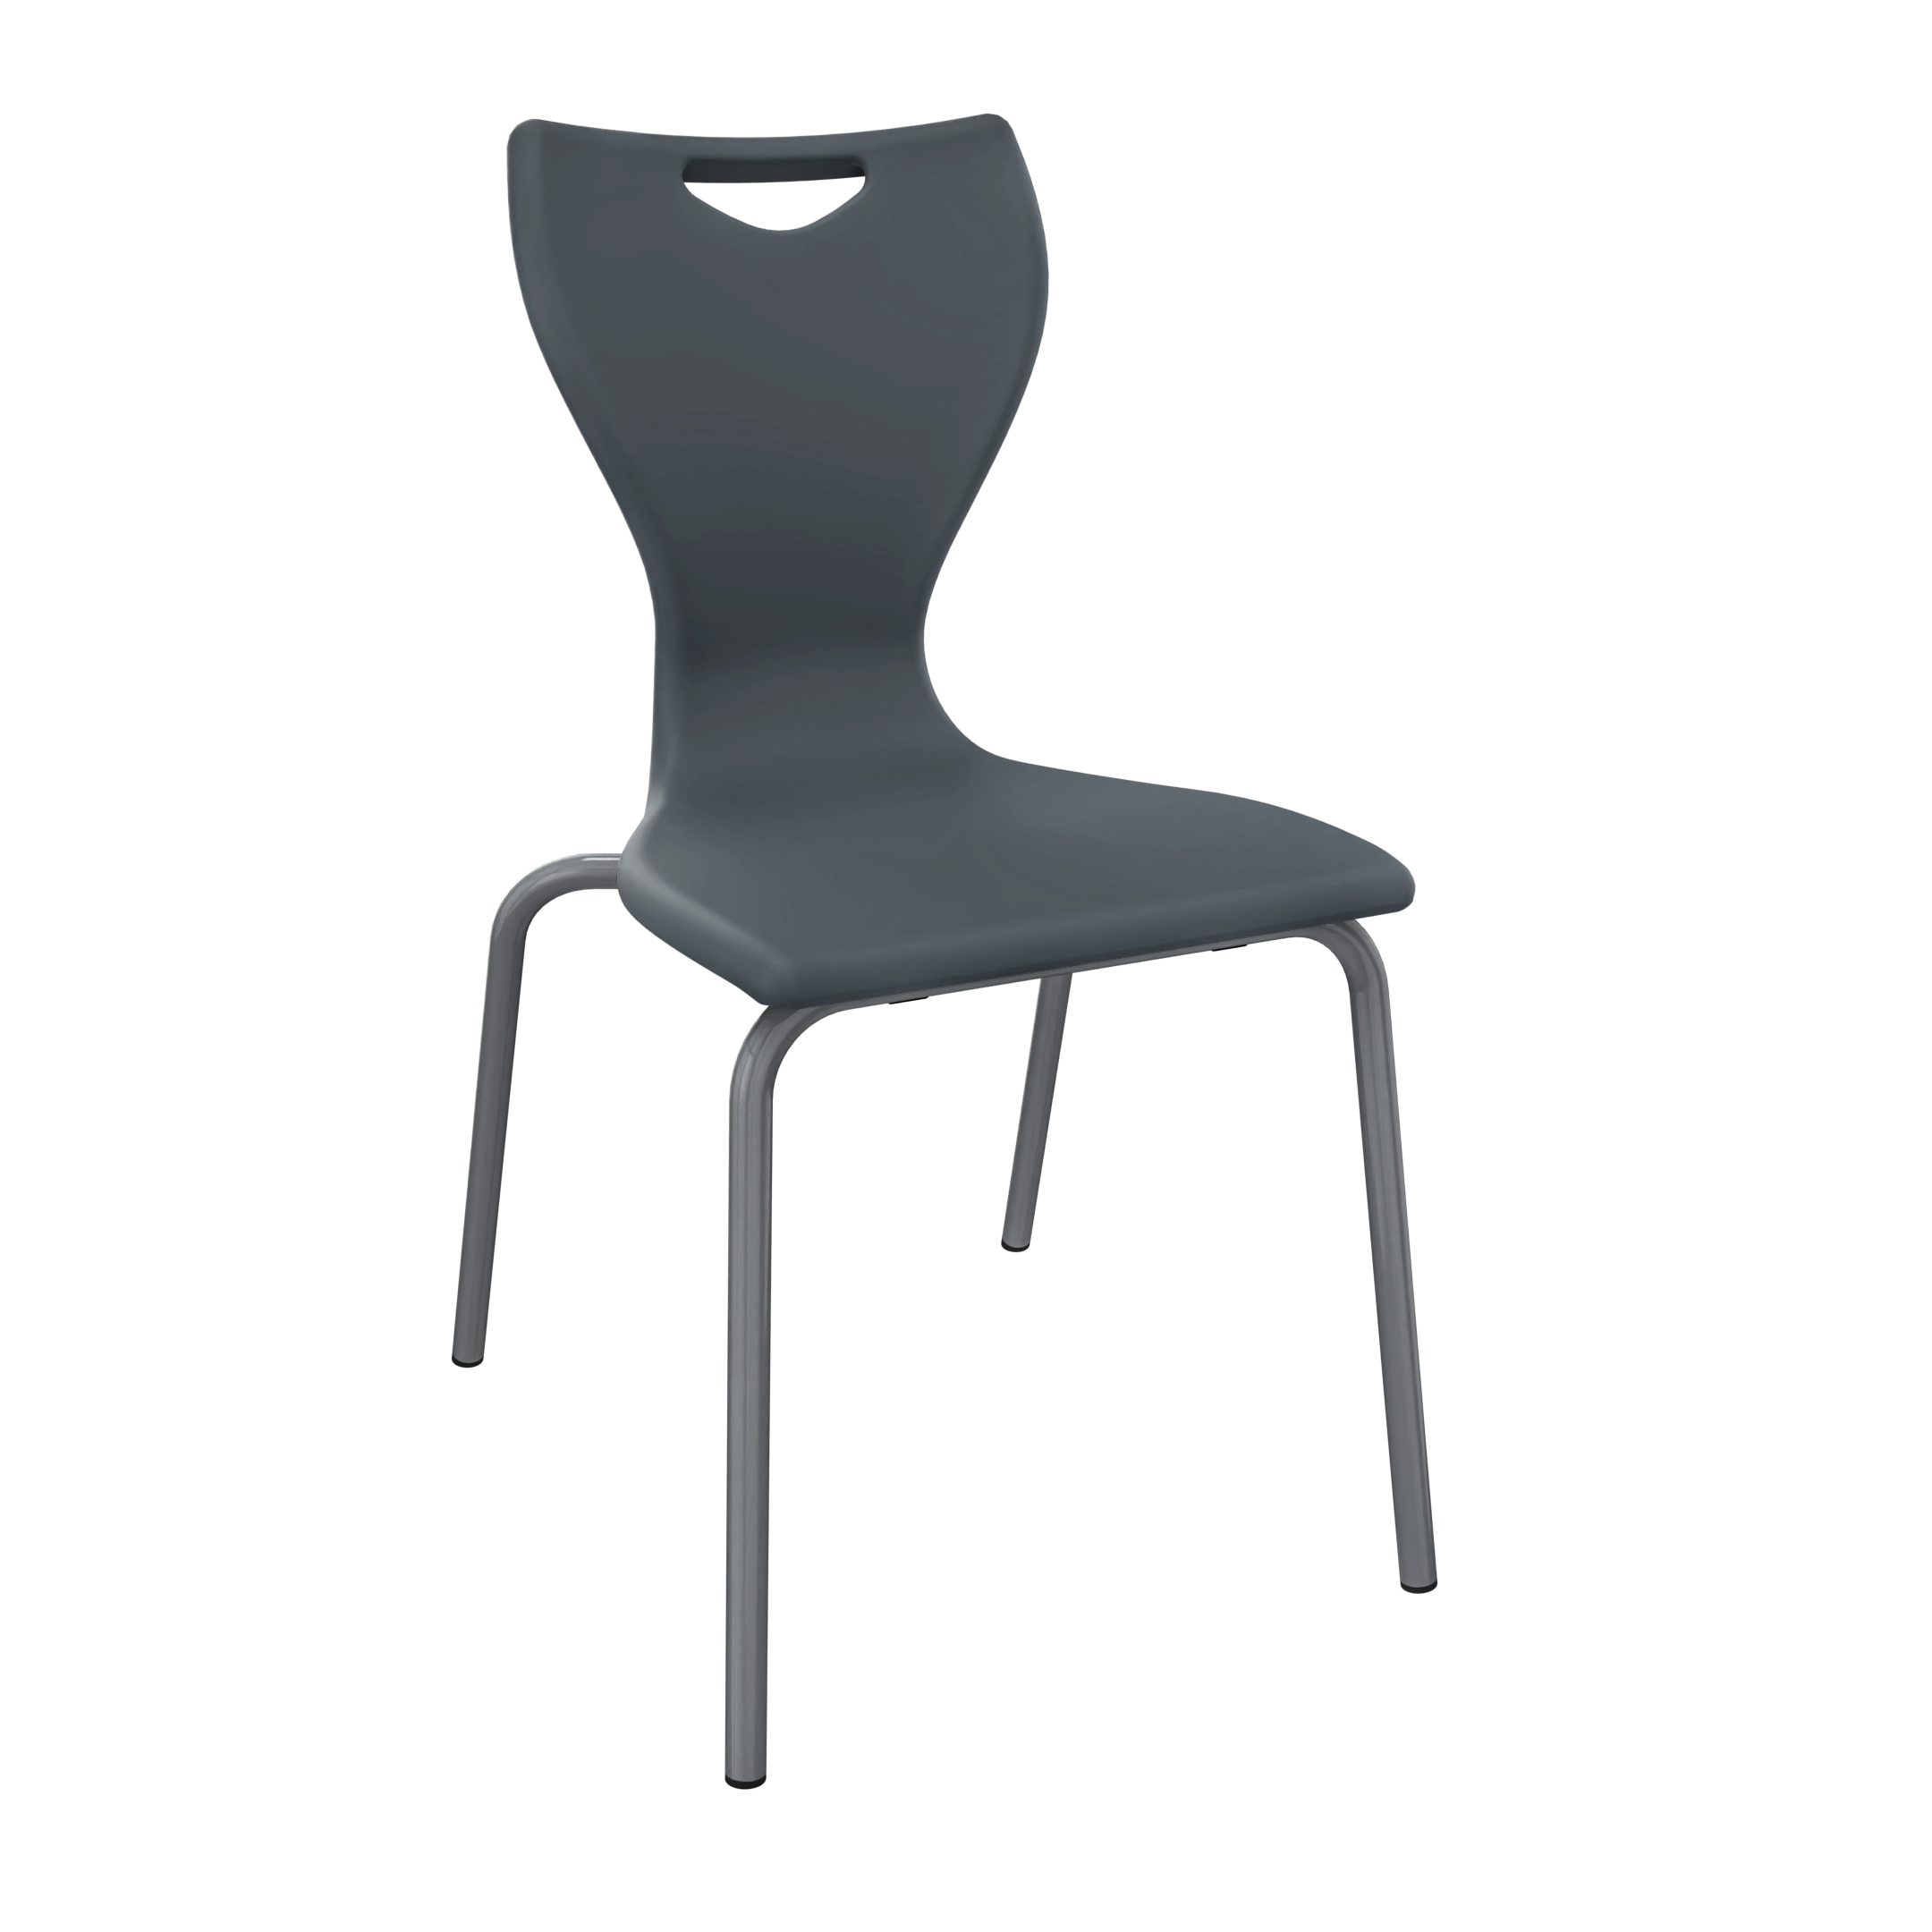 EN Classic – elegant 4-leg classroom chair